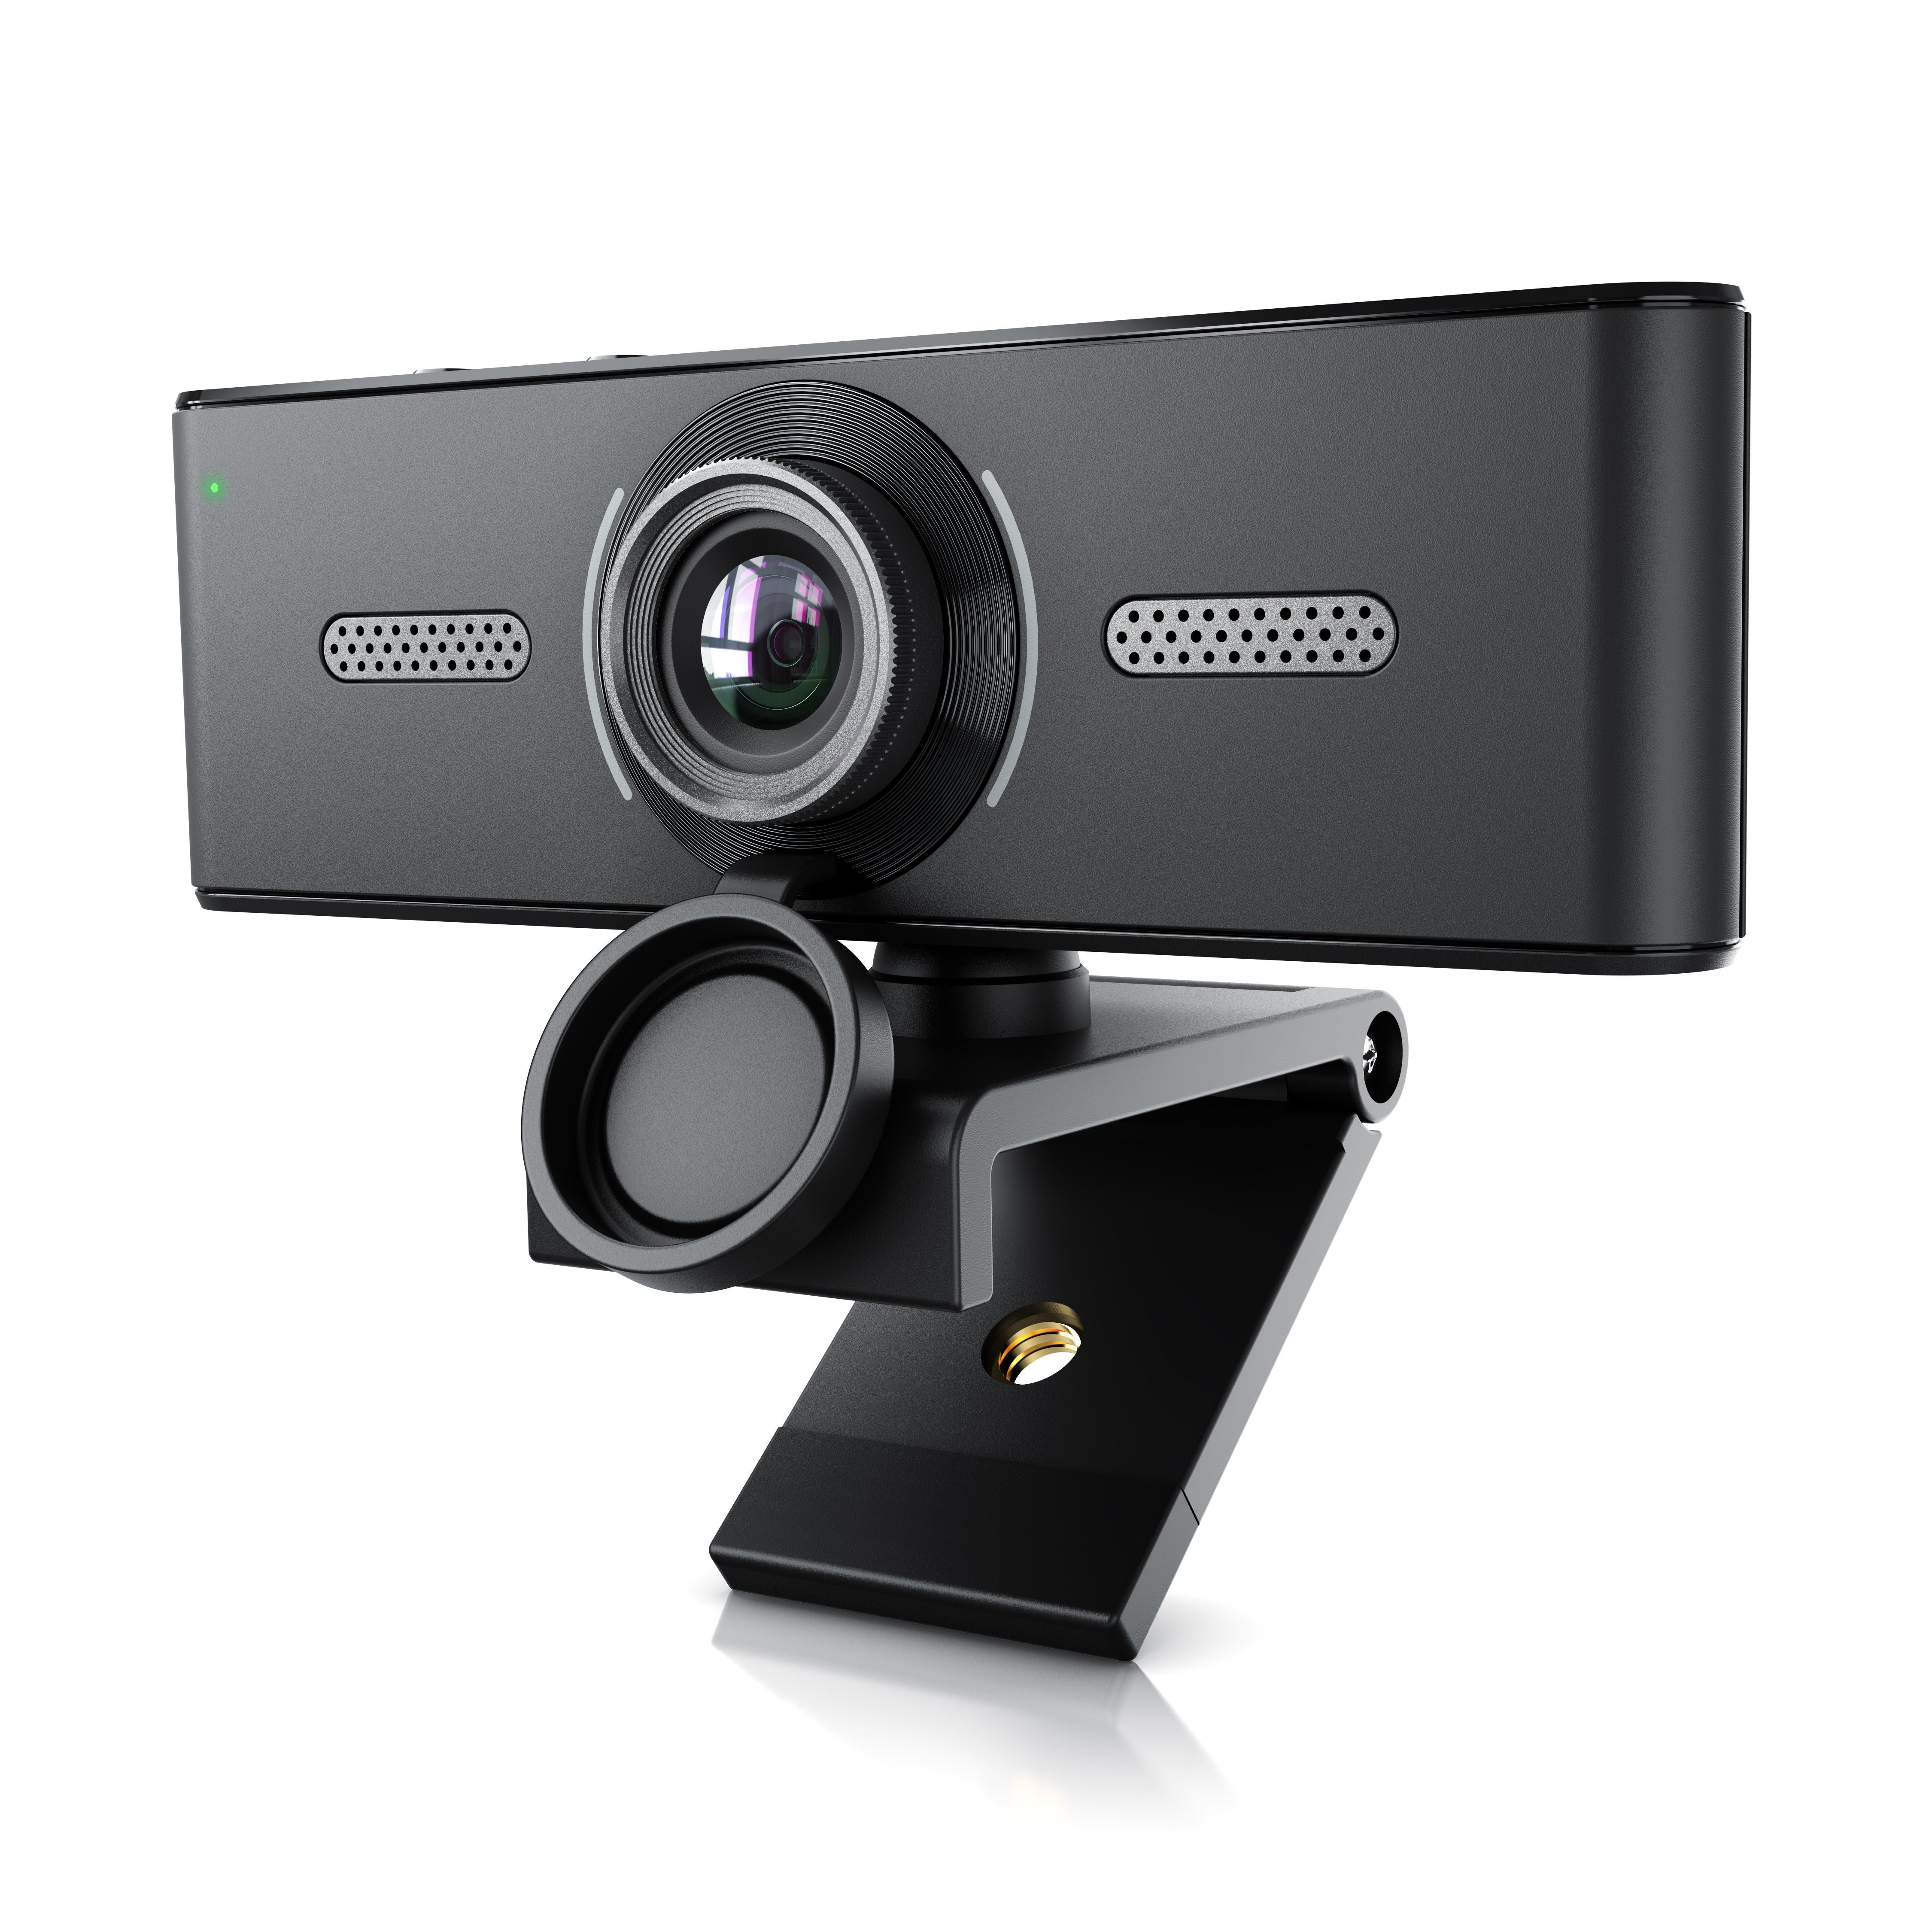 Aplic Full HD-Webcam (2K @ 30 Hz, FHD @ 60 Hz, manueller Fokus, Dual Mikrofon, Stativgewinde) | Webcams